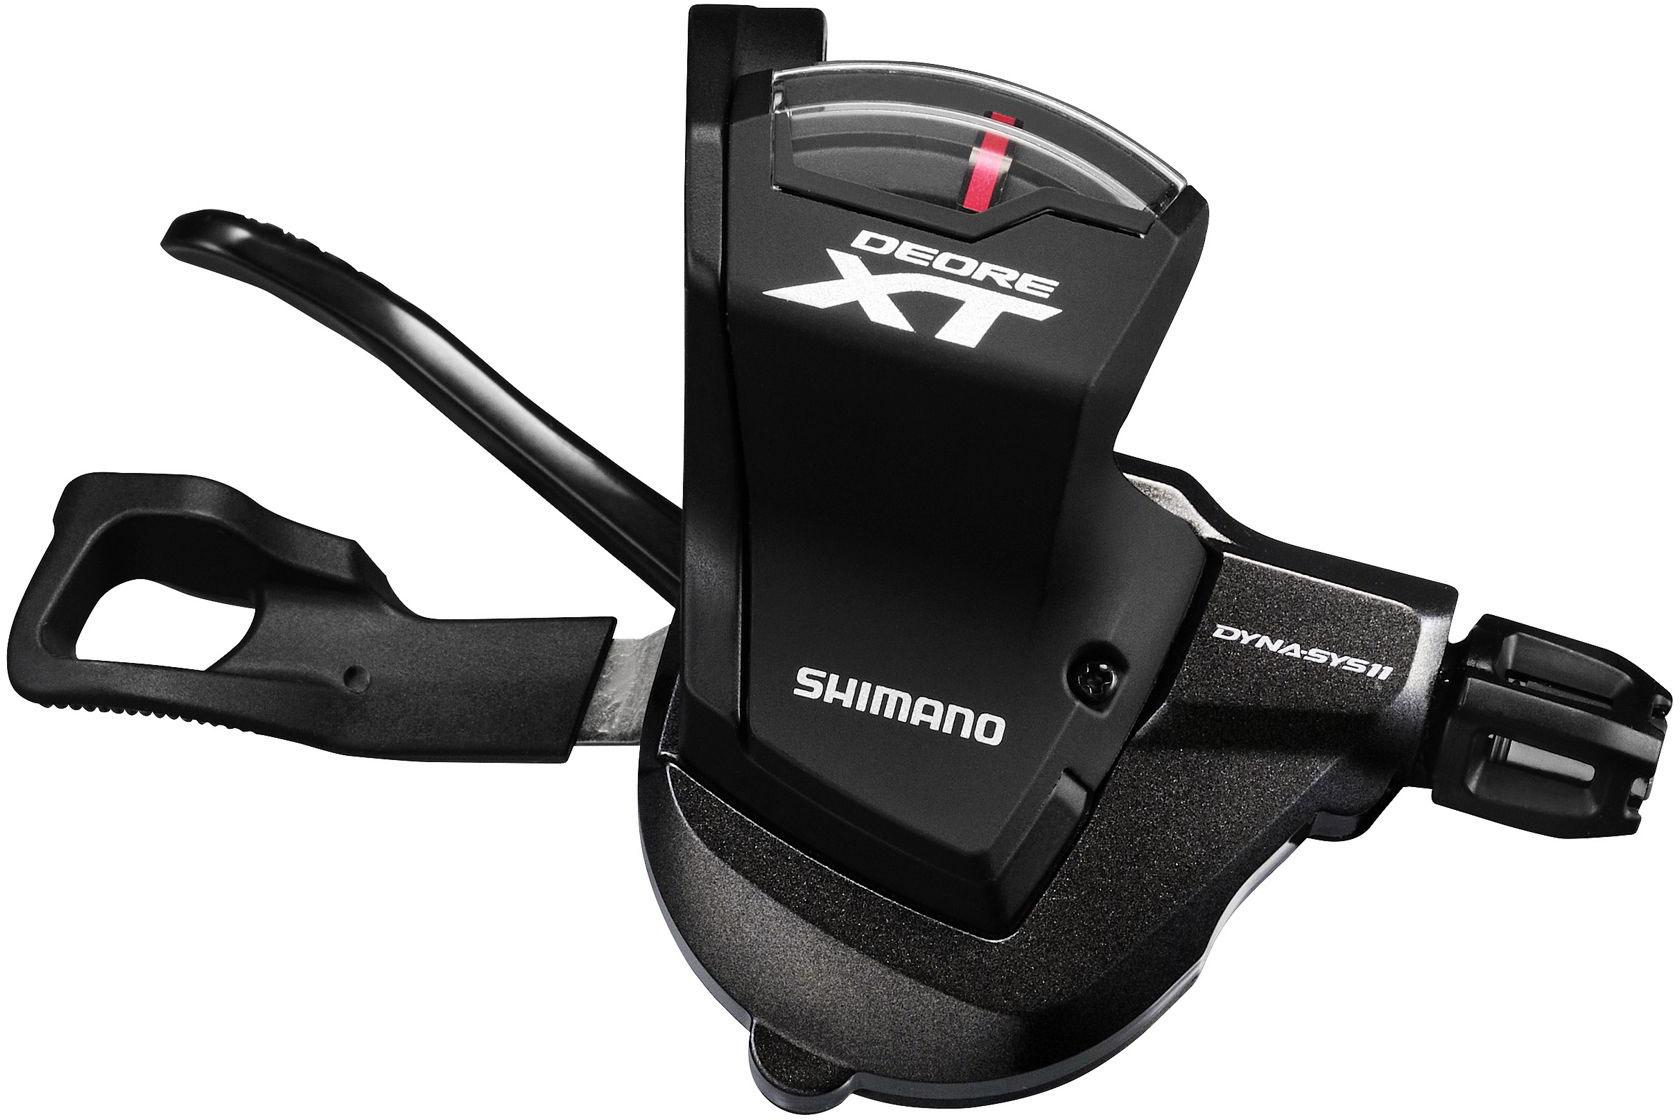 Shimano Deore Xt M8000 11 Speed Gear Shifter - Black